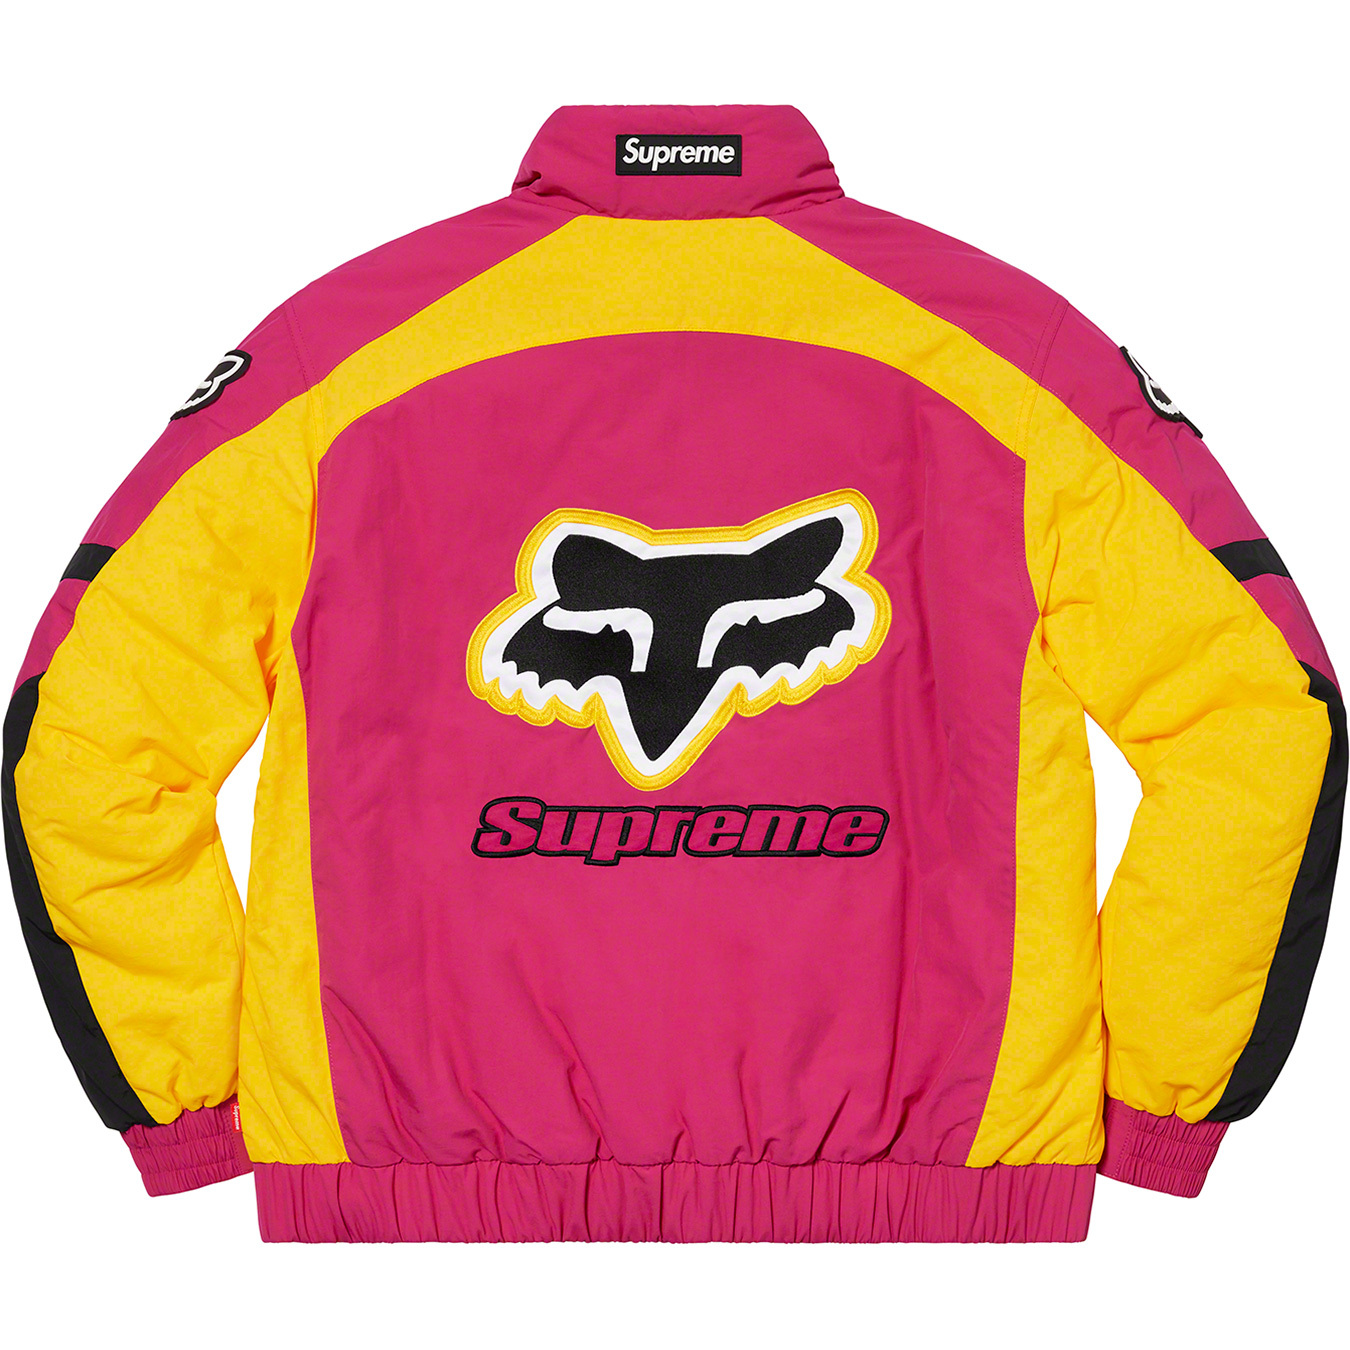 Supreme®/Fox® Racing Puffy Jacket | Supreme 20fw